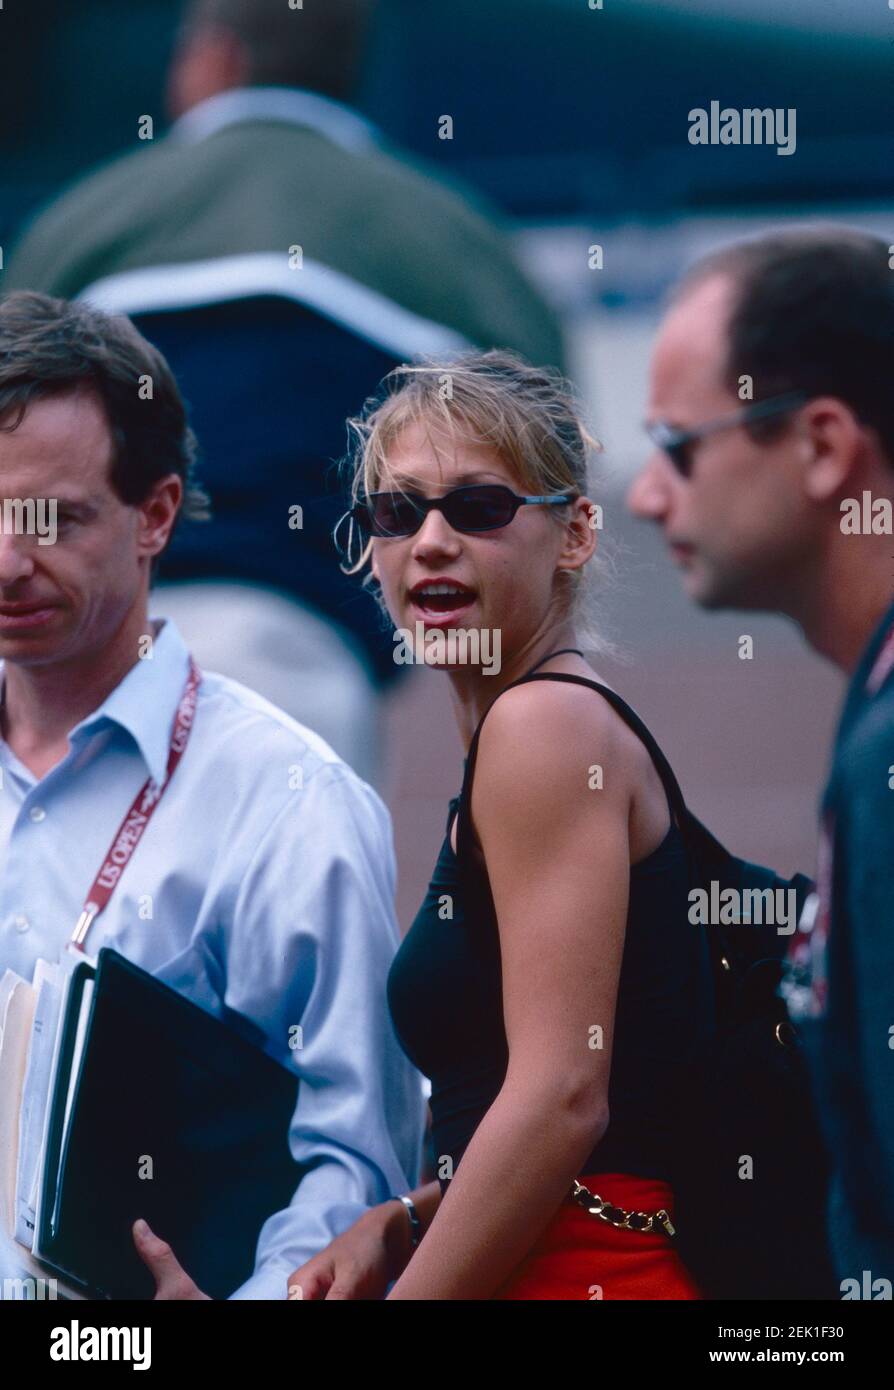 Russian tennis player Anna Kournikova, 1990s Stock Photo